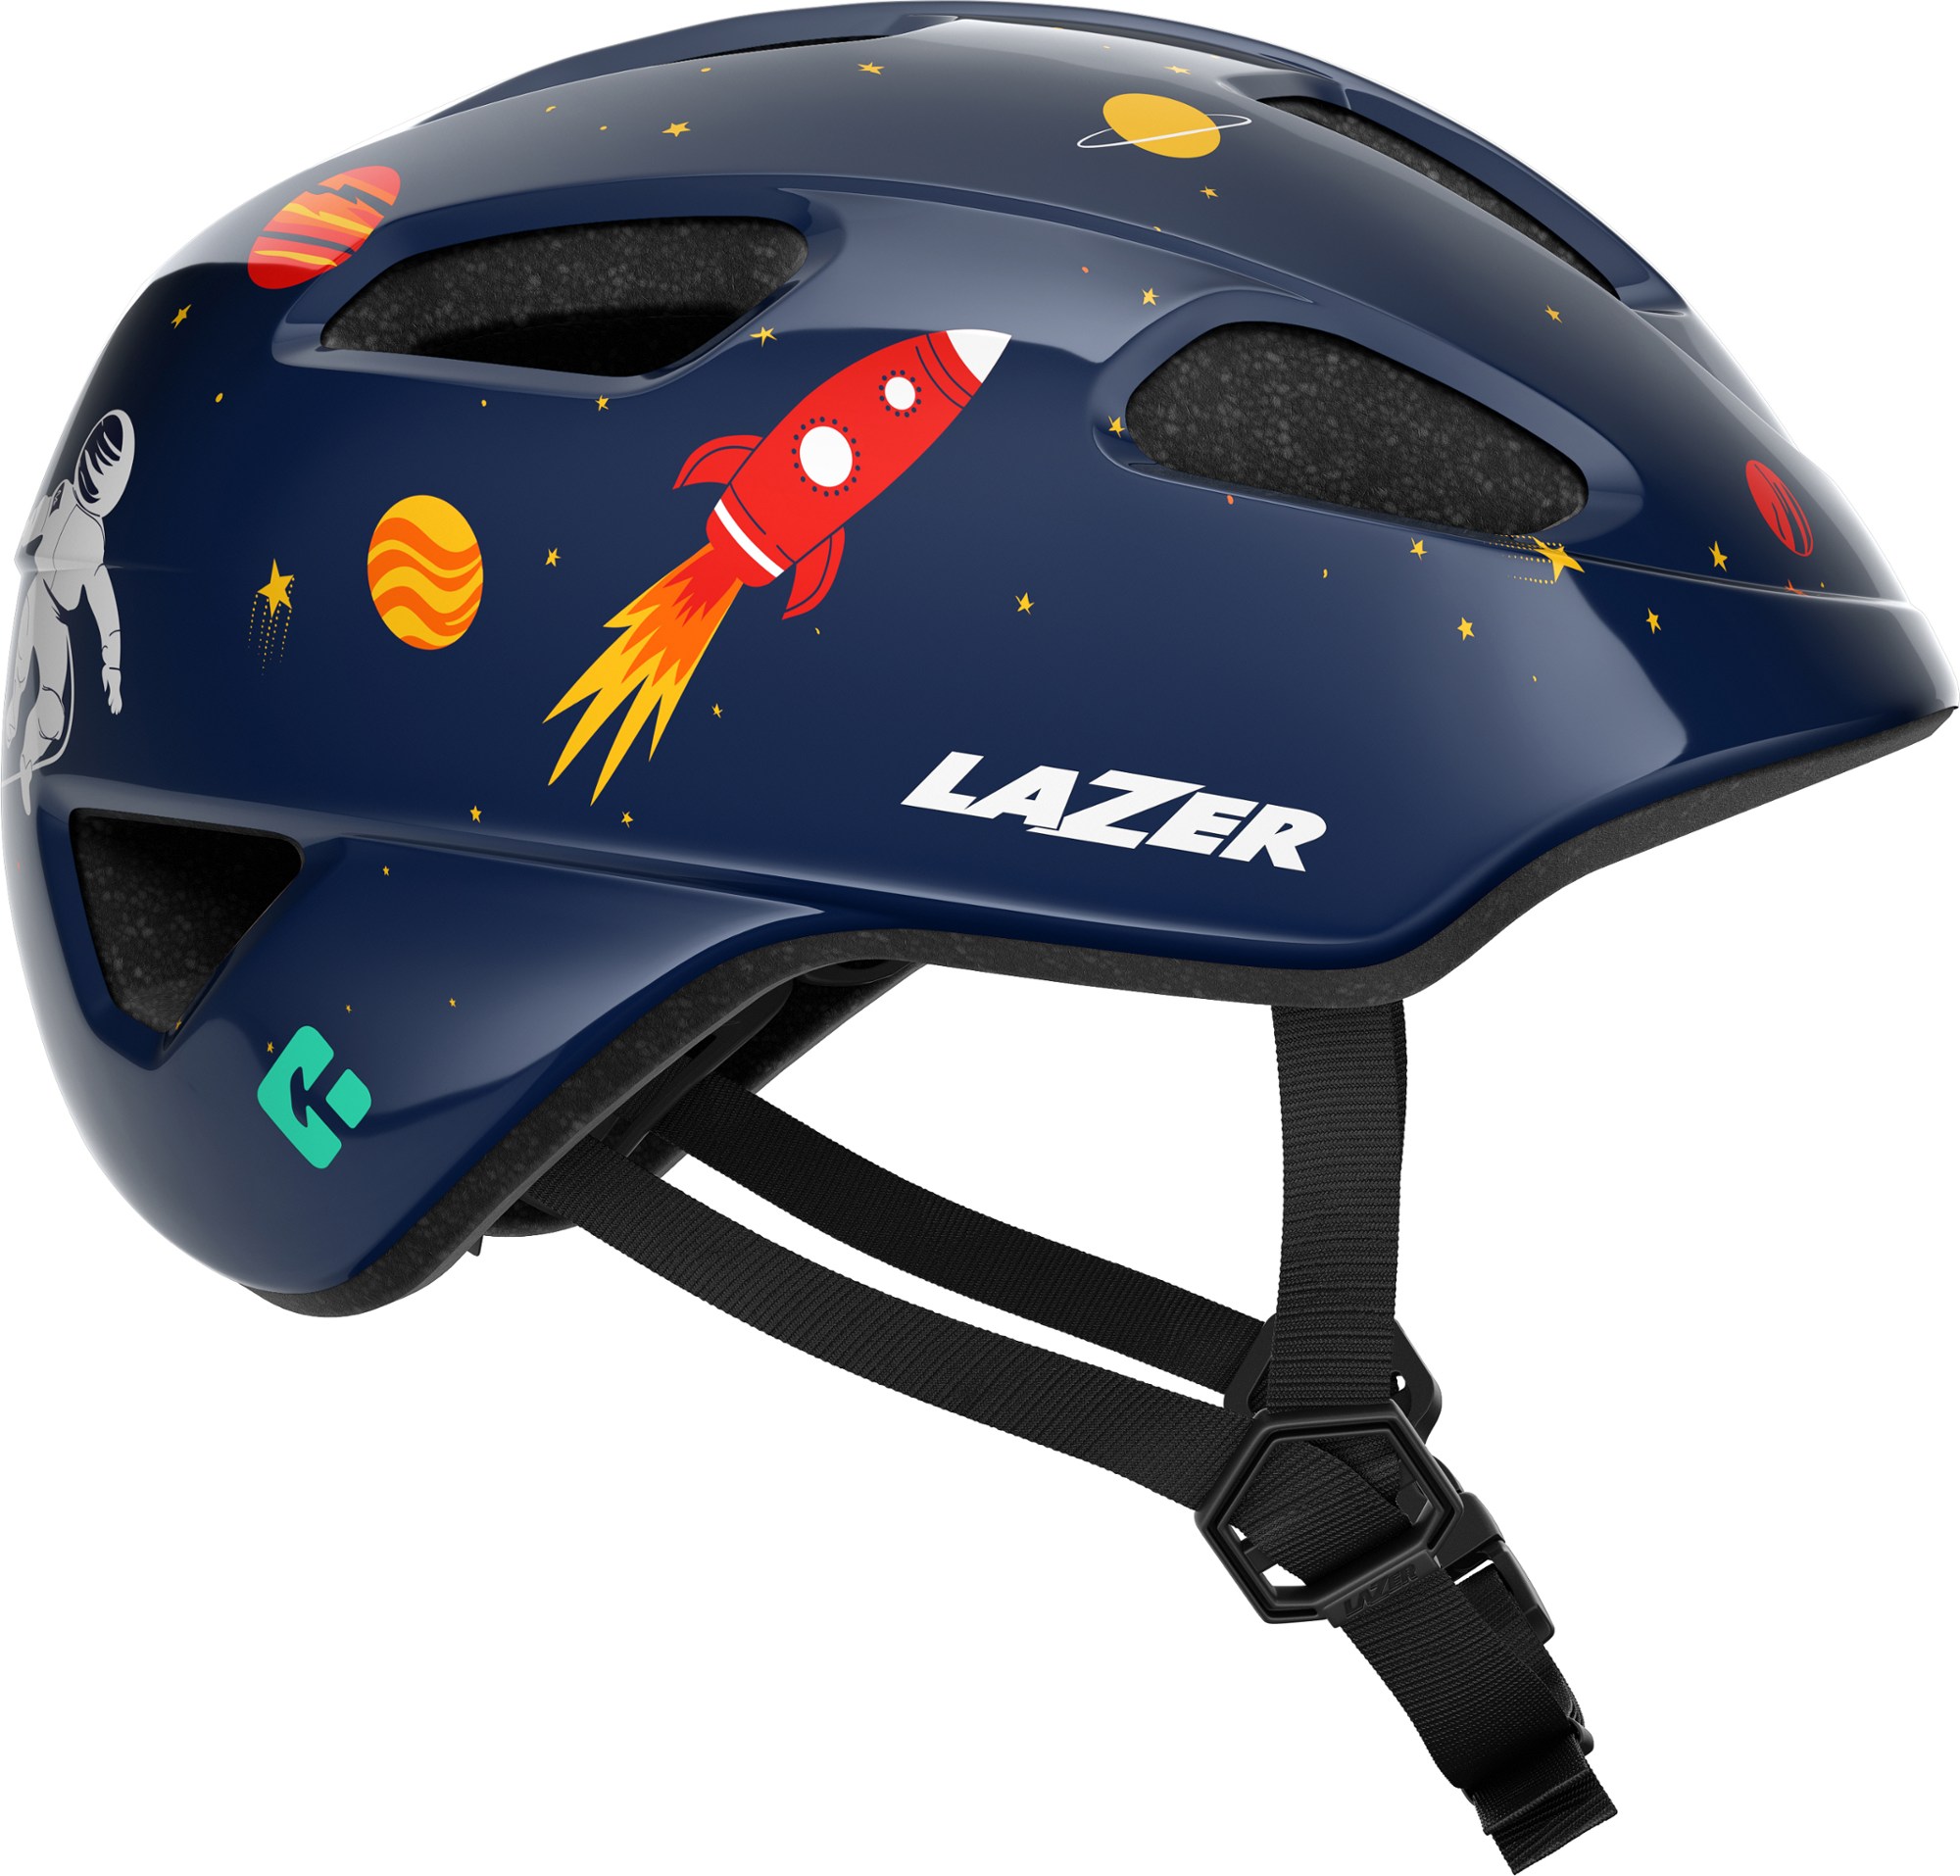 велосипедный шлем nutz kineticore детский lazer синий Велосипедный шлем Nutz KinetiCore — детский Lazer, синий